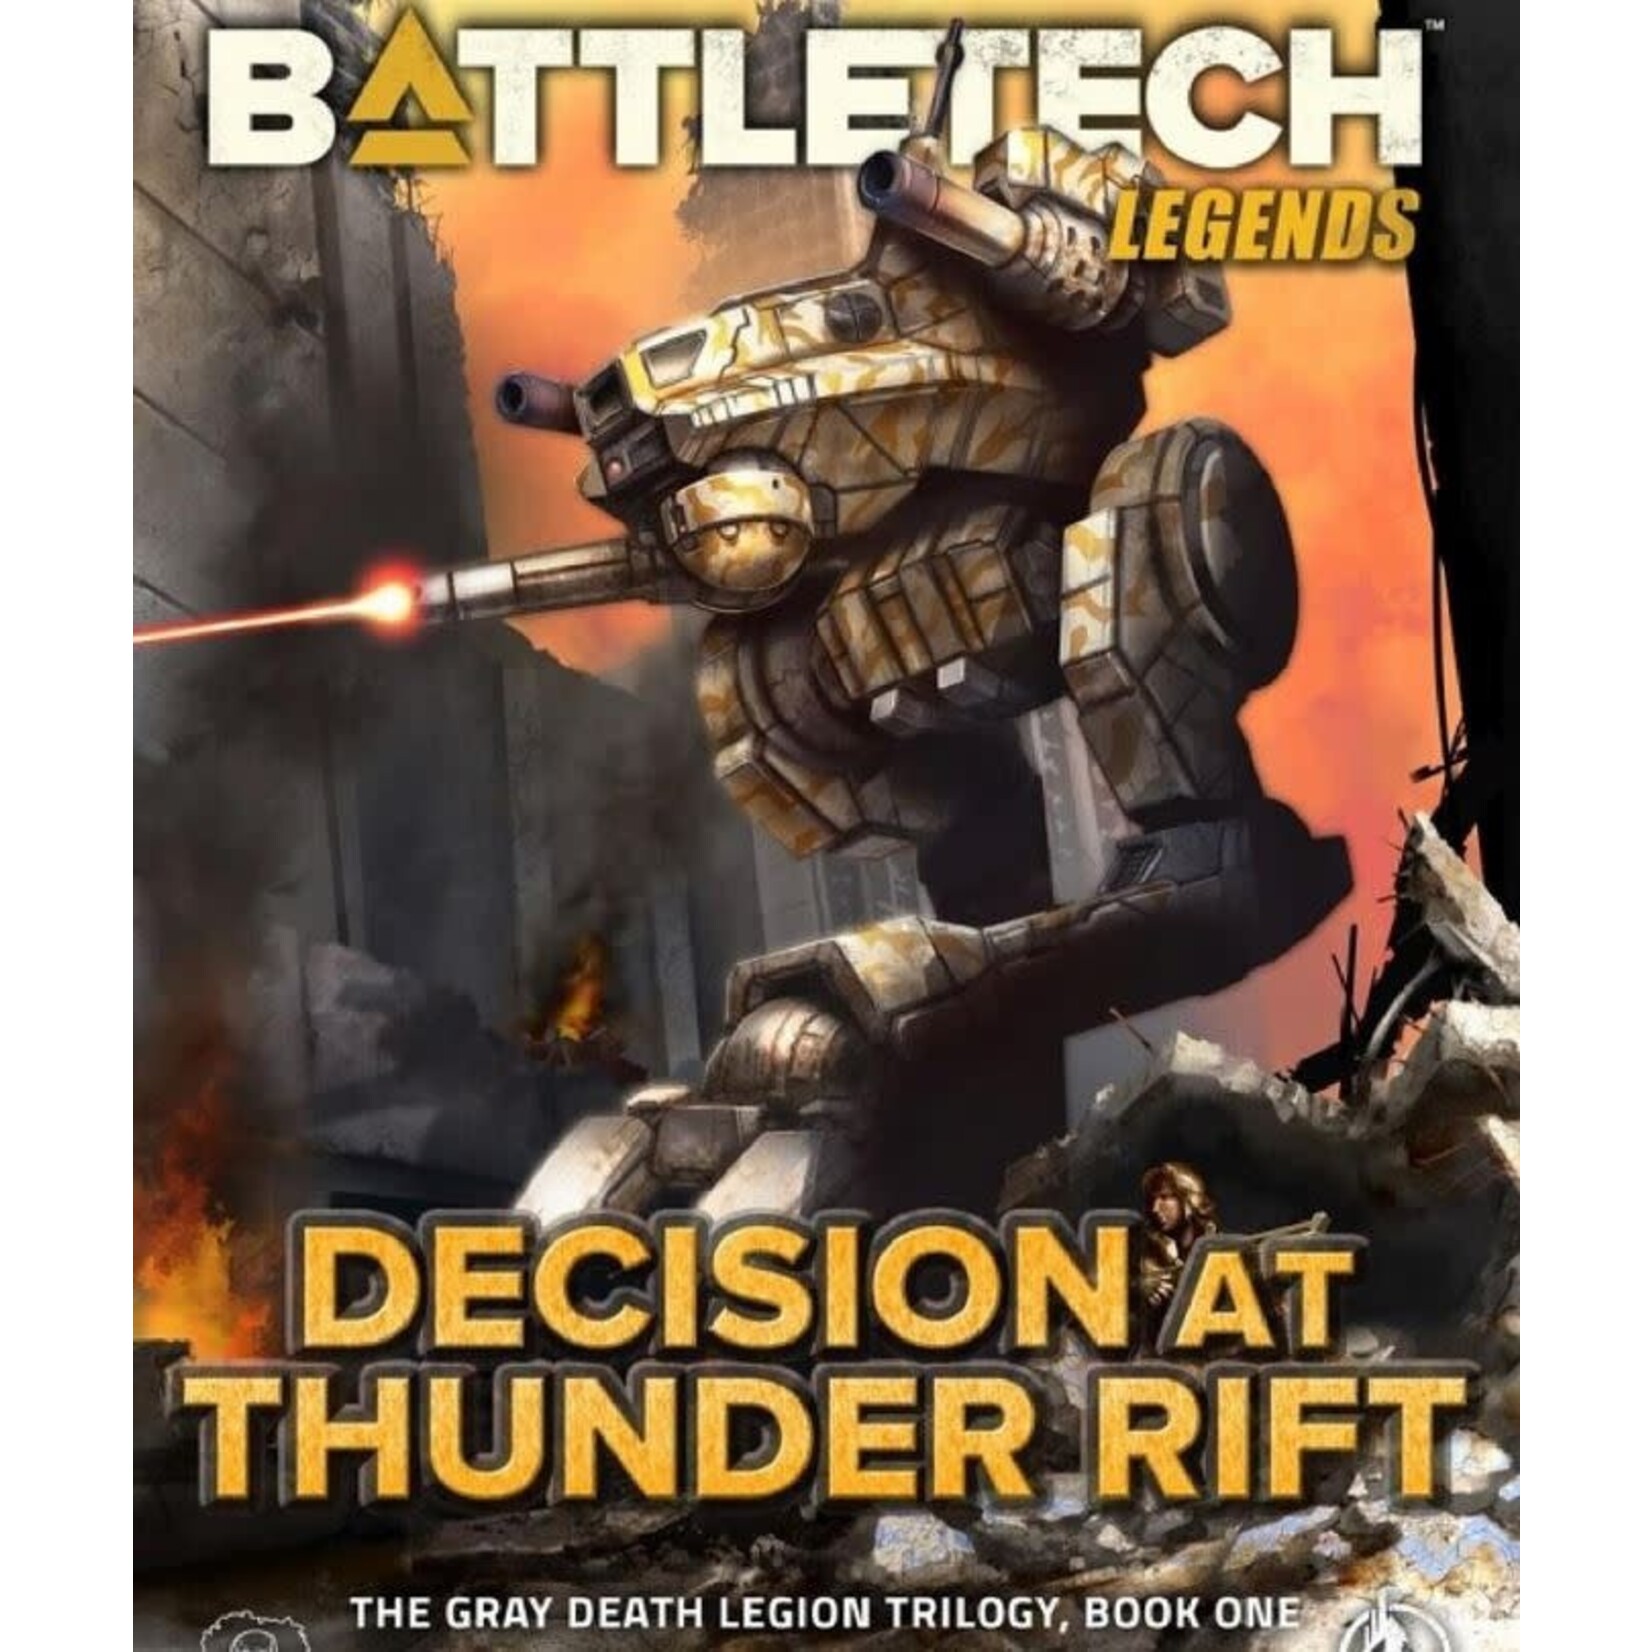 BattleTech: Decision at Thunder Rift Hardcover (Preorder)